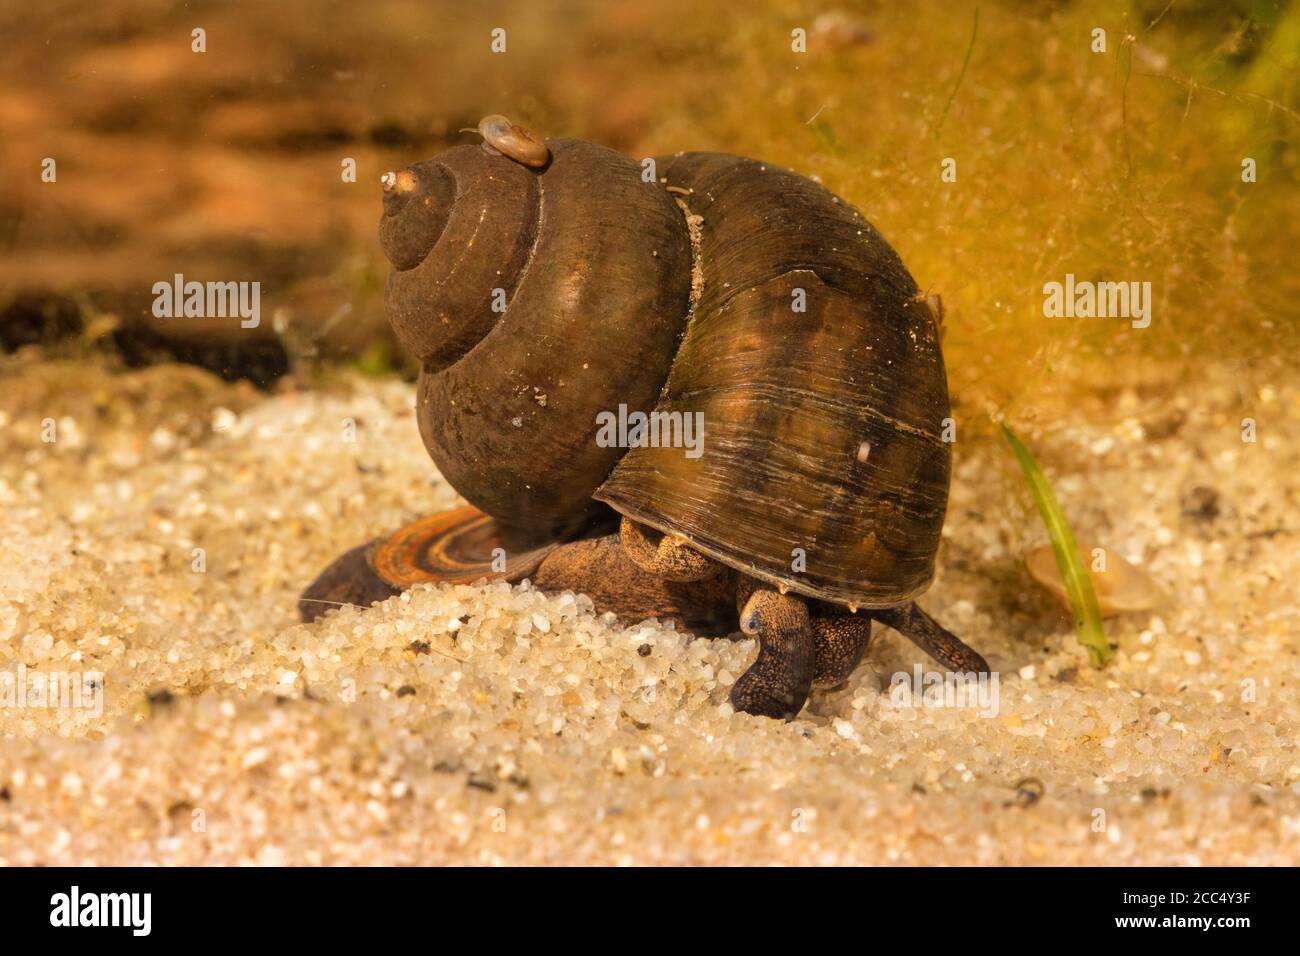 pointed river snail, Lister's river snail (Viviparus contectus, Paludina contecta, Paludina viviparus), male creeping on sandy bottom Stock Photo